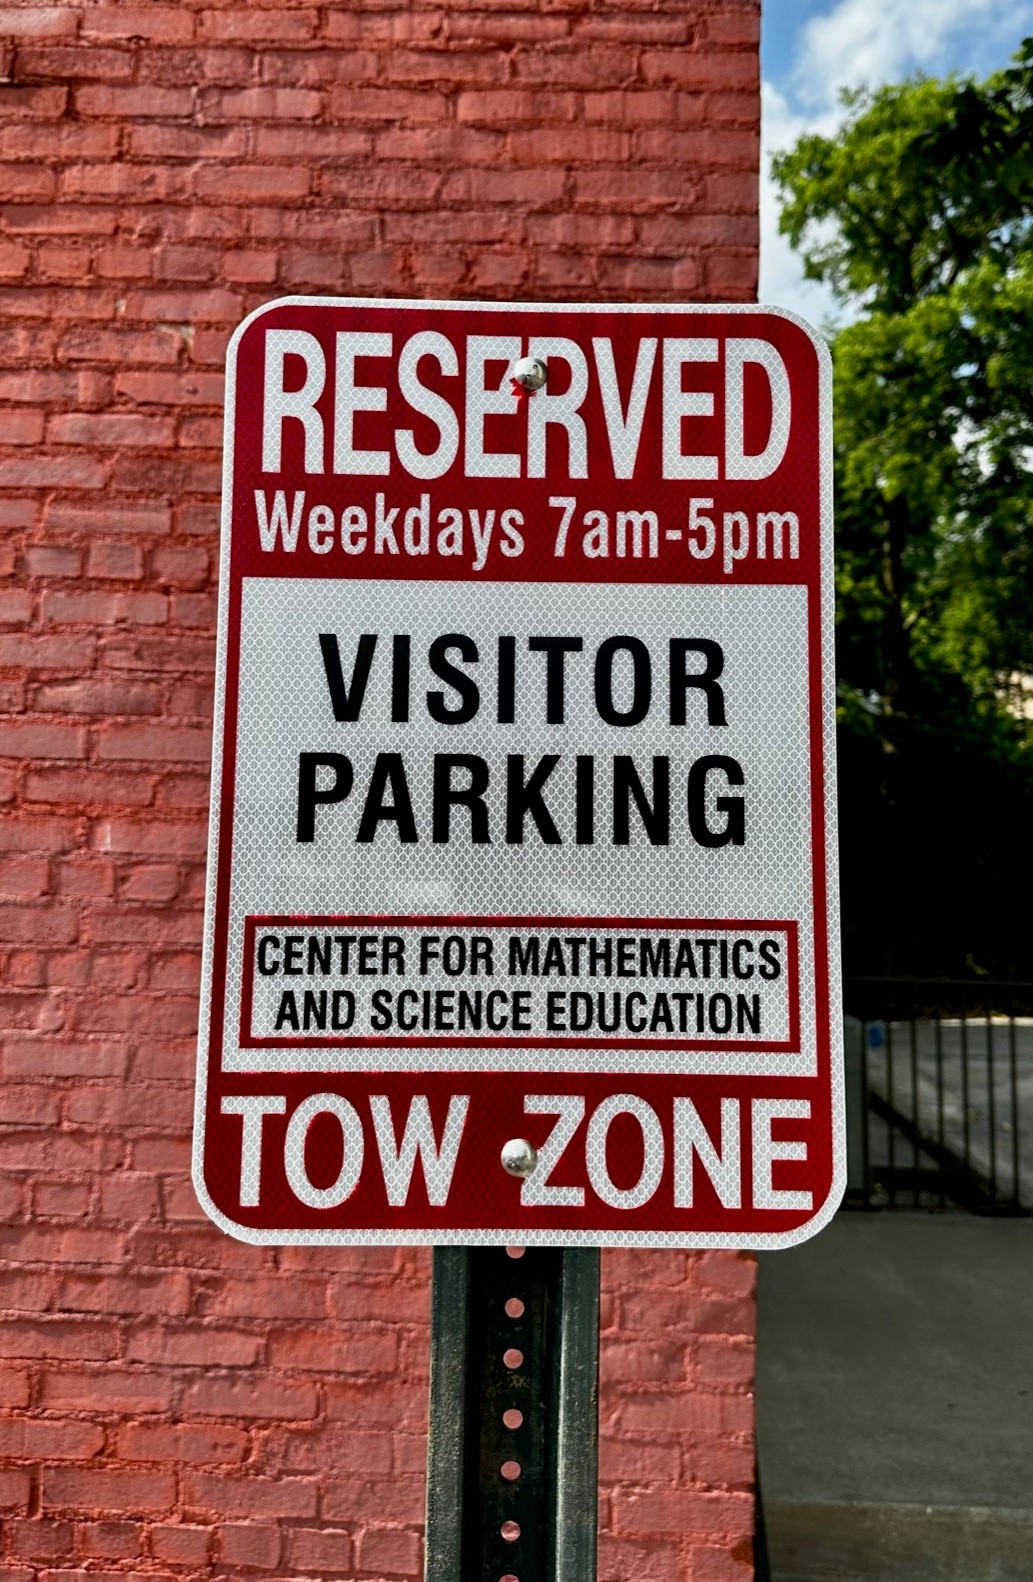 Reserved Parking sign